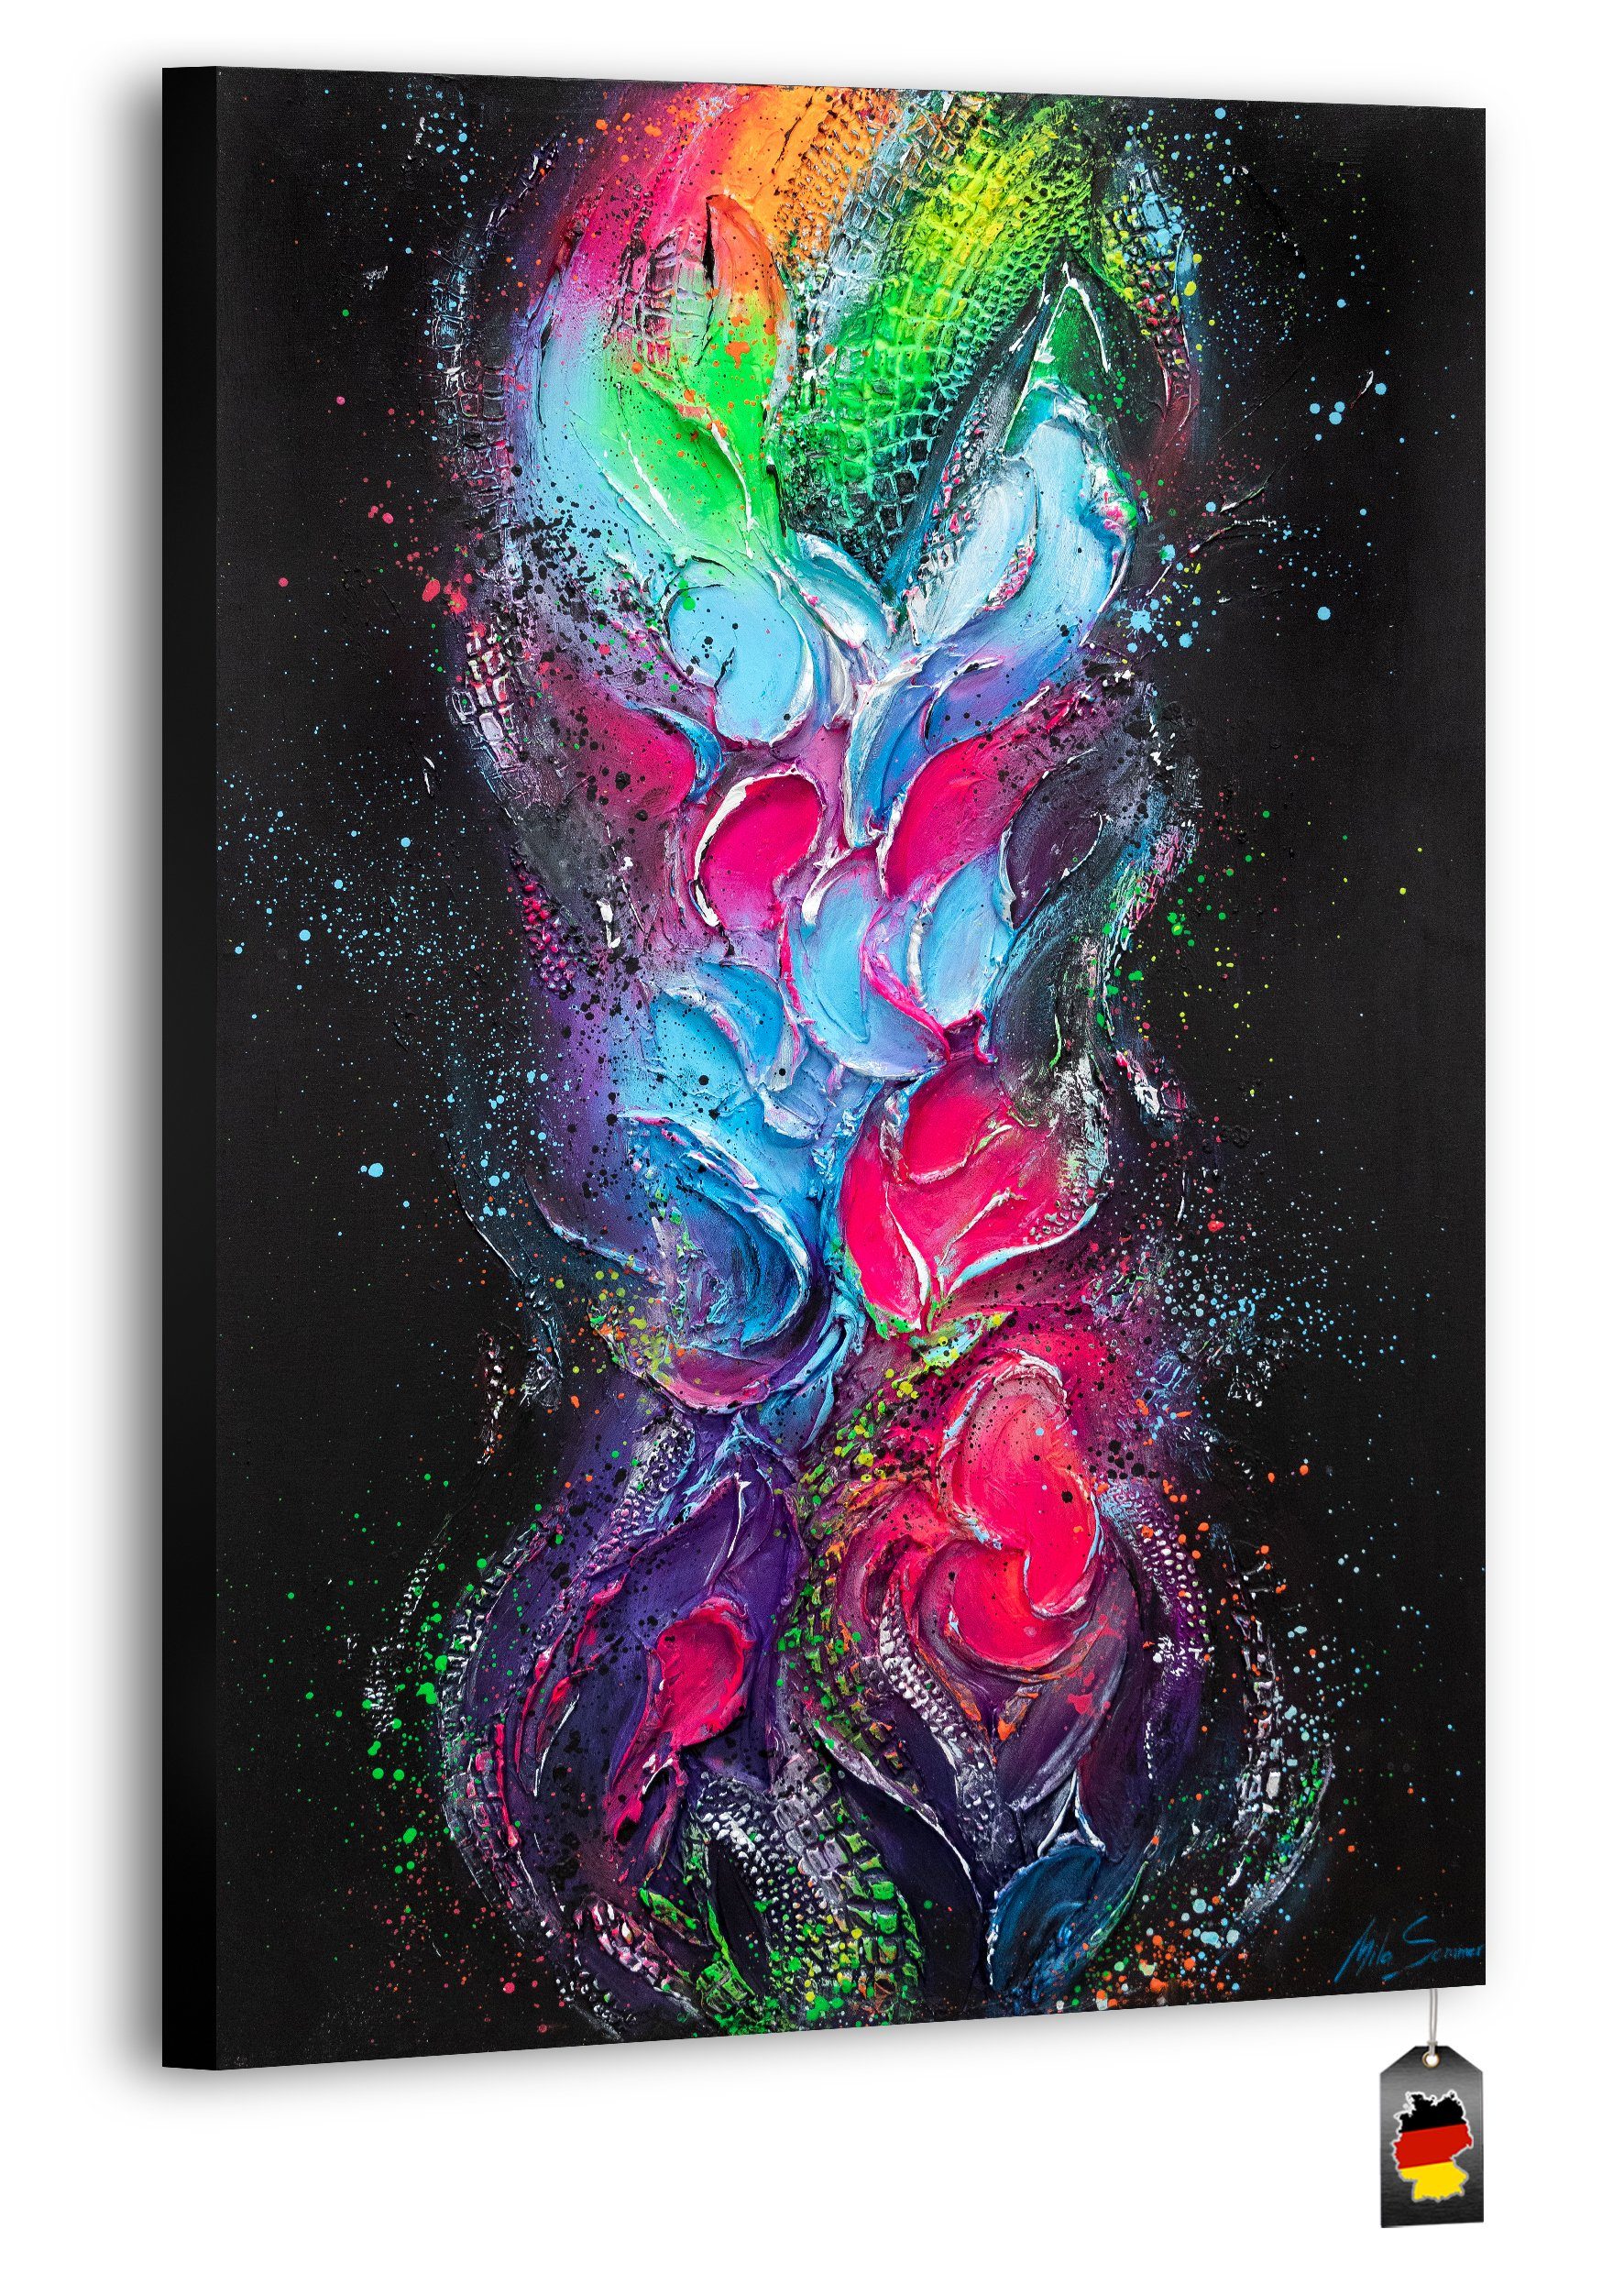 YS-Art Gemälde Abstraktion, Bild Leinwand Vertikales Regenbogen Schwarz Fokus, Bunt Handgemalt